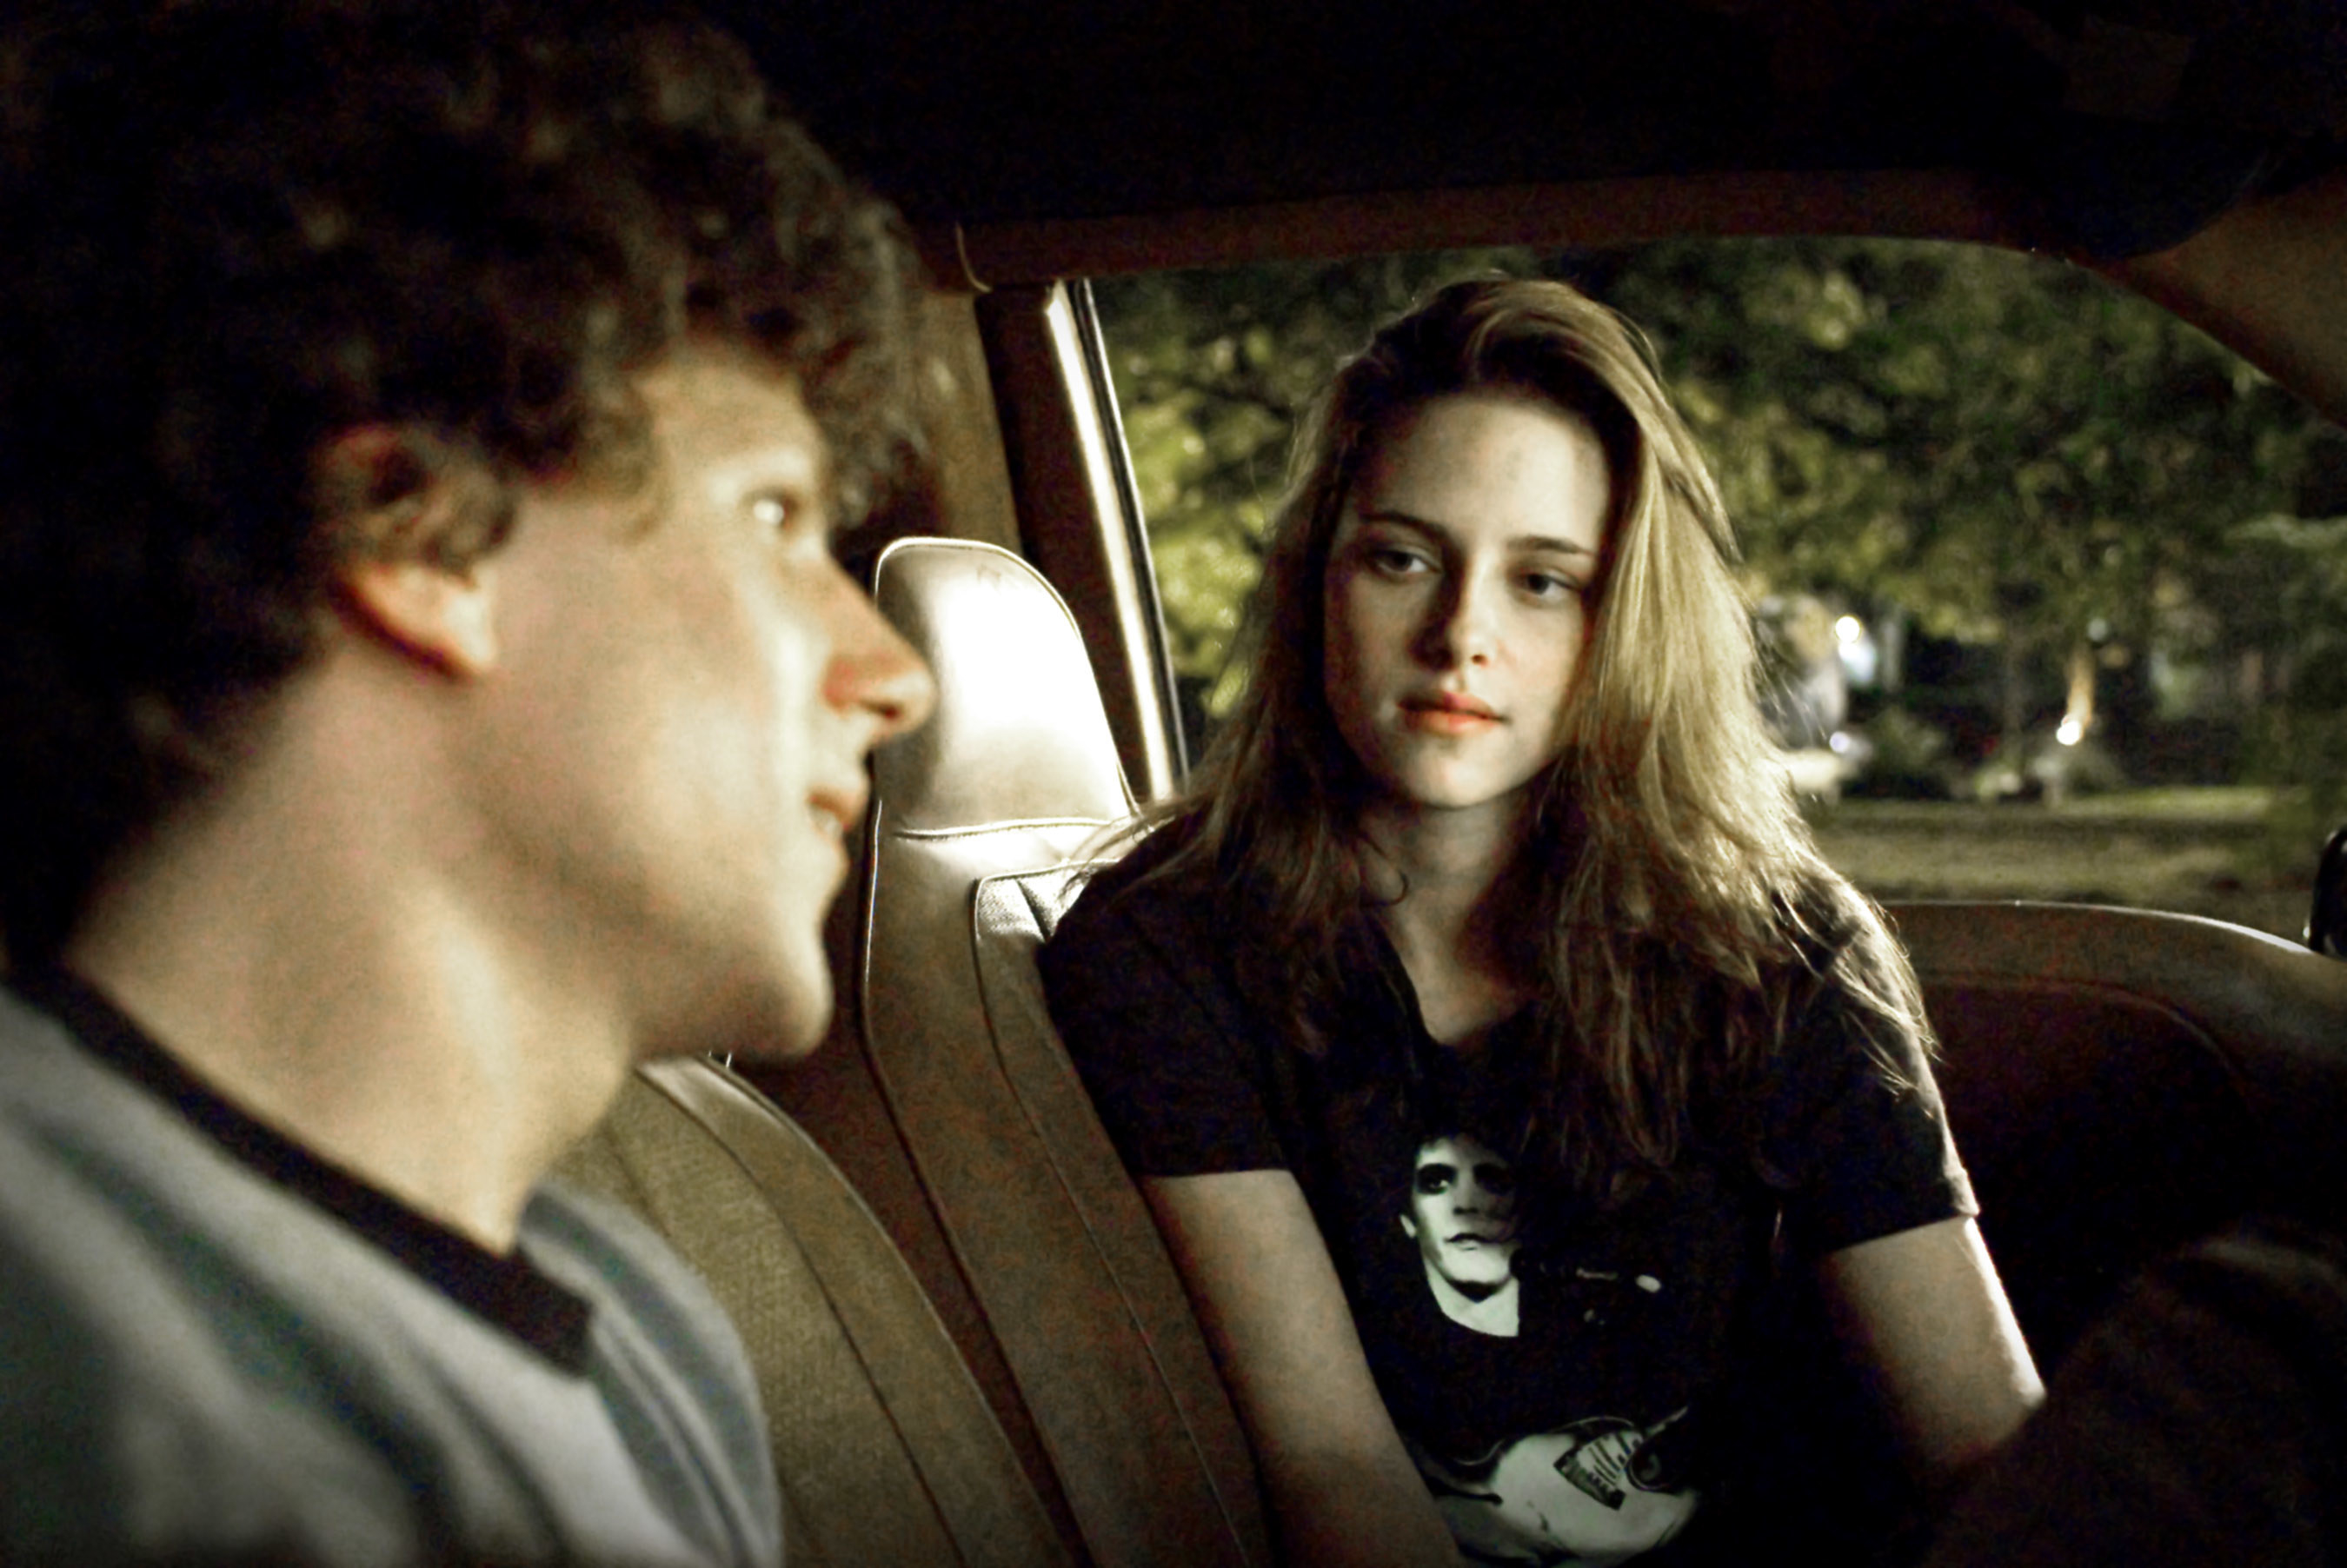 Jesse Eisenberg and Kristen Stewart sit in a car together